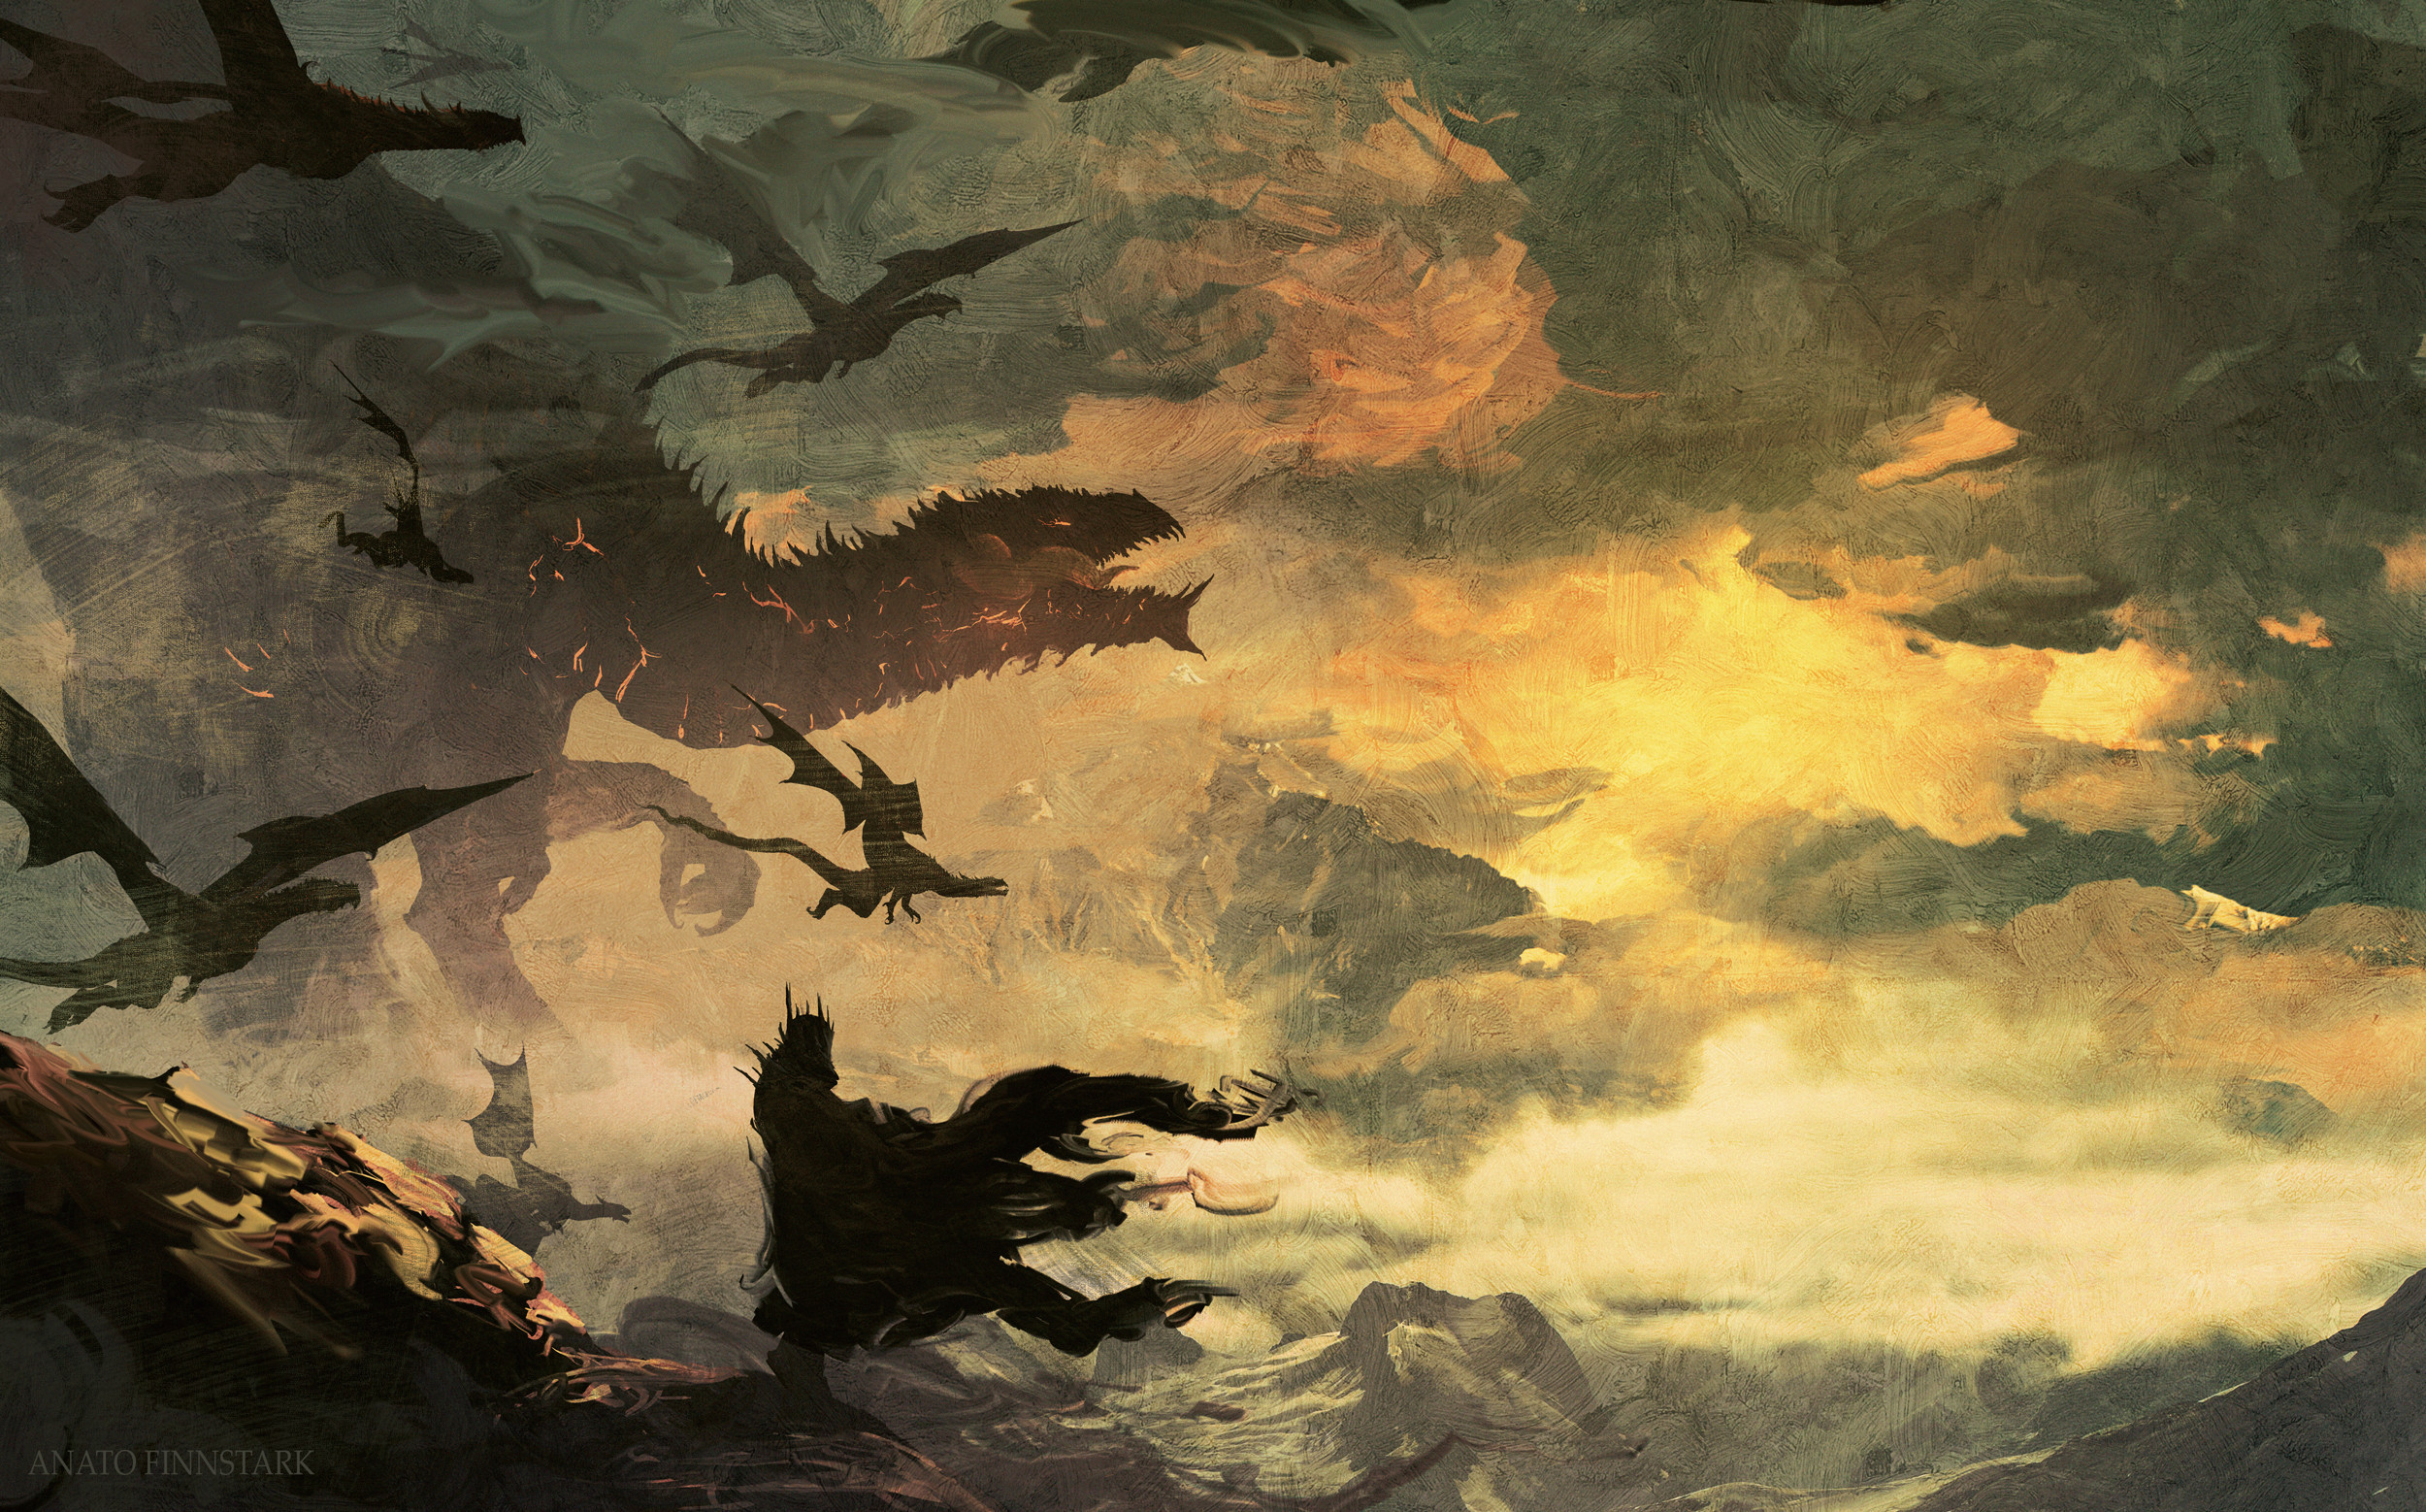 Fantasy Art Artwork Dragon The Lord Of The Rings Morgoth Anato Finnstark 2500x1558